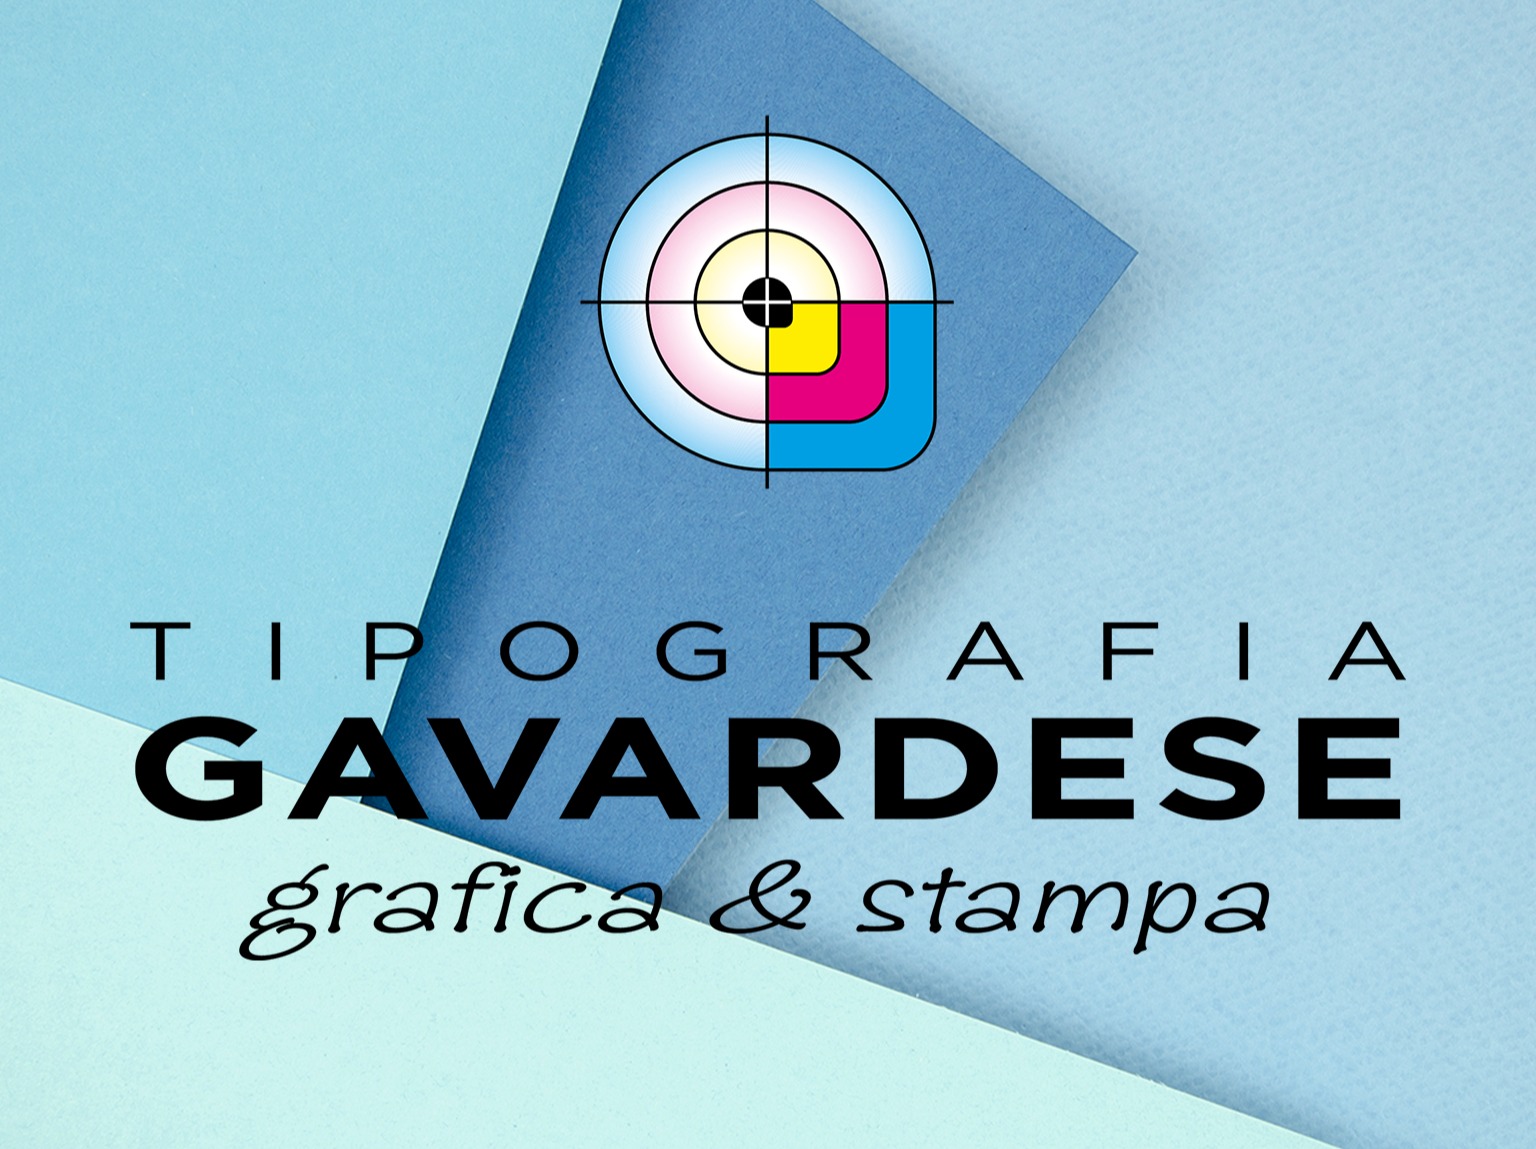 web-logo-tip-blue-shades-of-polygon-paper-design